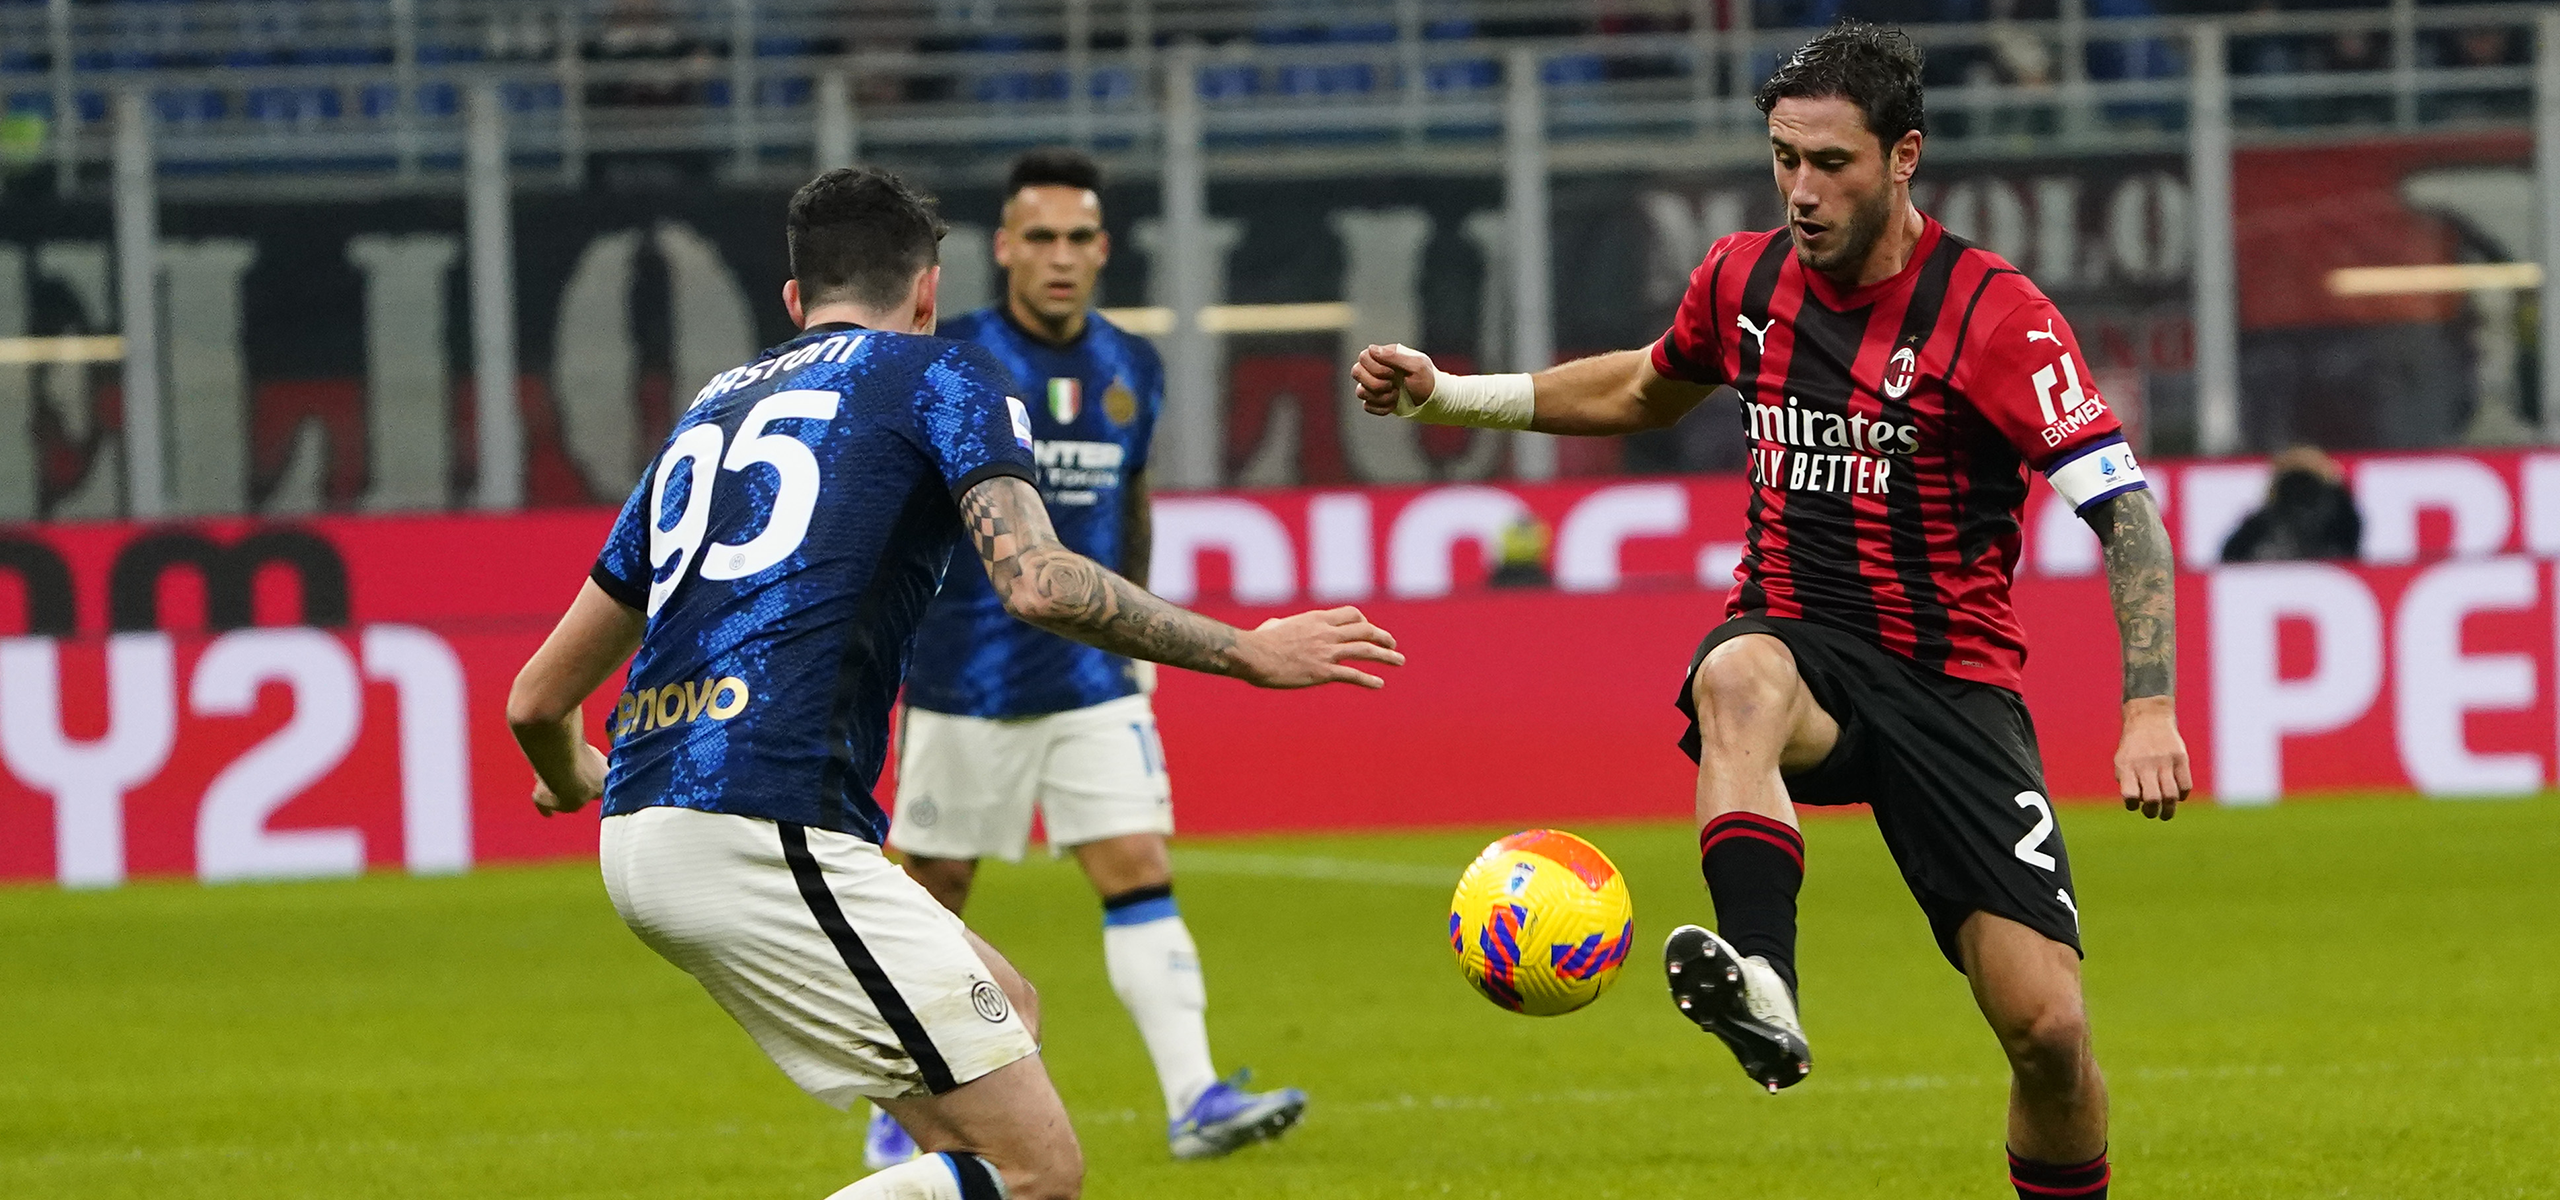 Inter v AC Milan, Serie A 2021/2022: stats and pre-match trivia | AC Milan